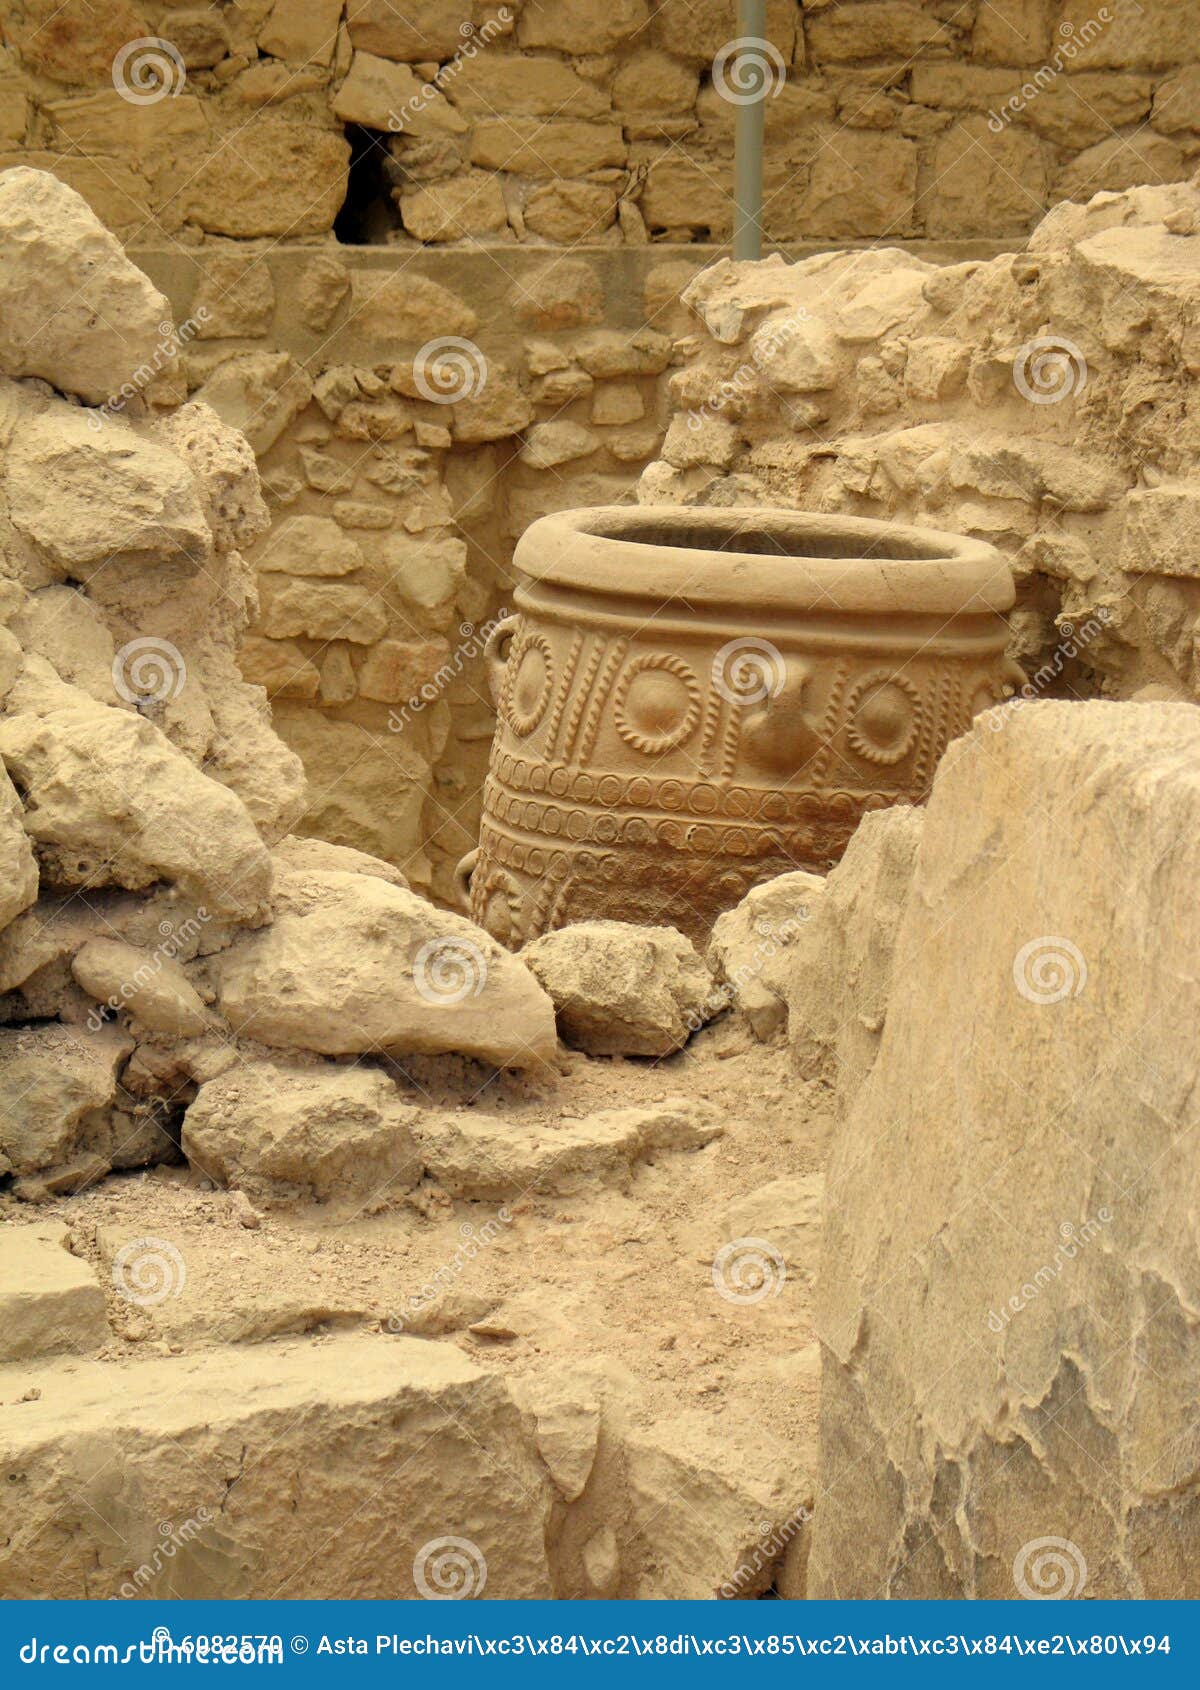 minoan style amphora